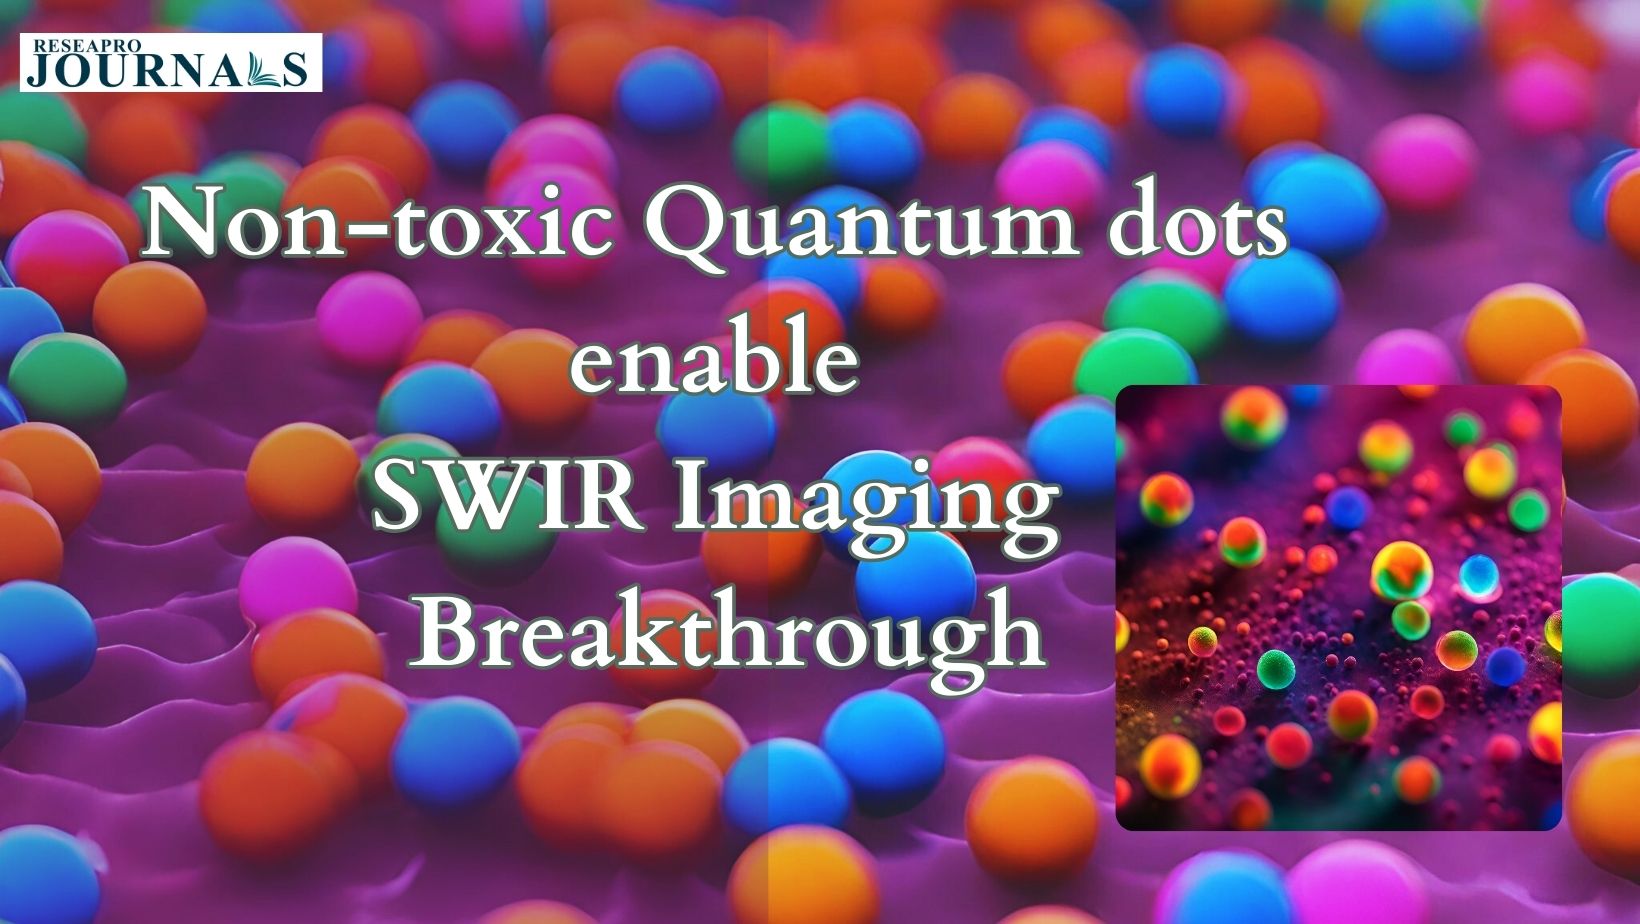 Non-toxic quantum dots enable SWIR imaging breakthrough